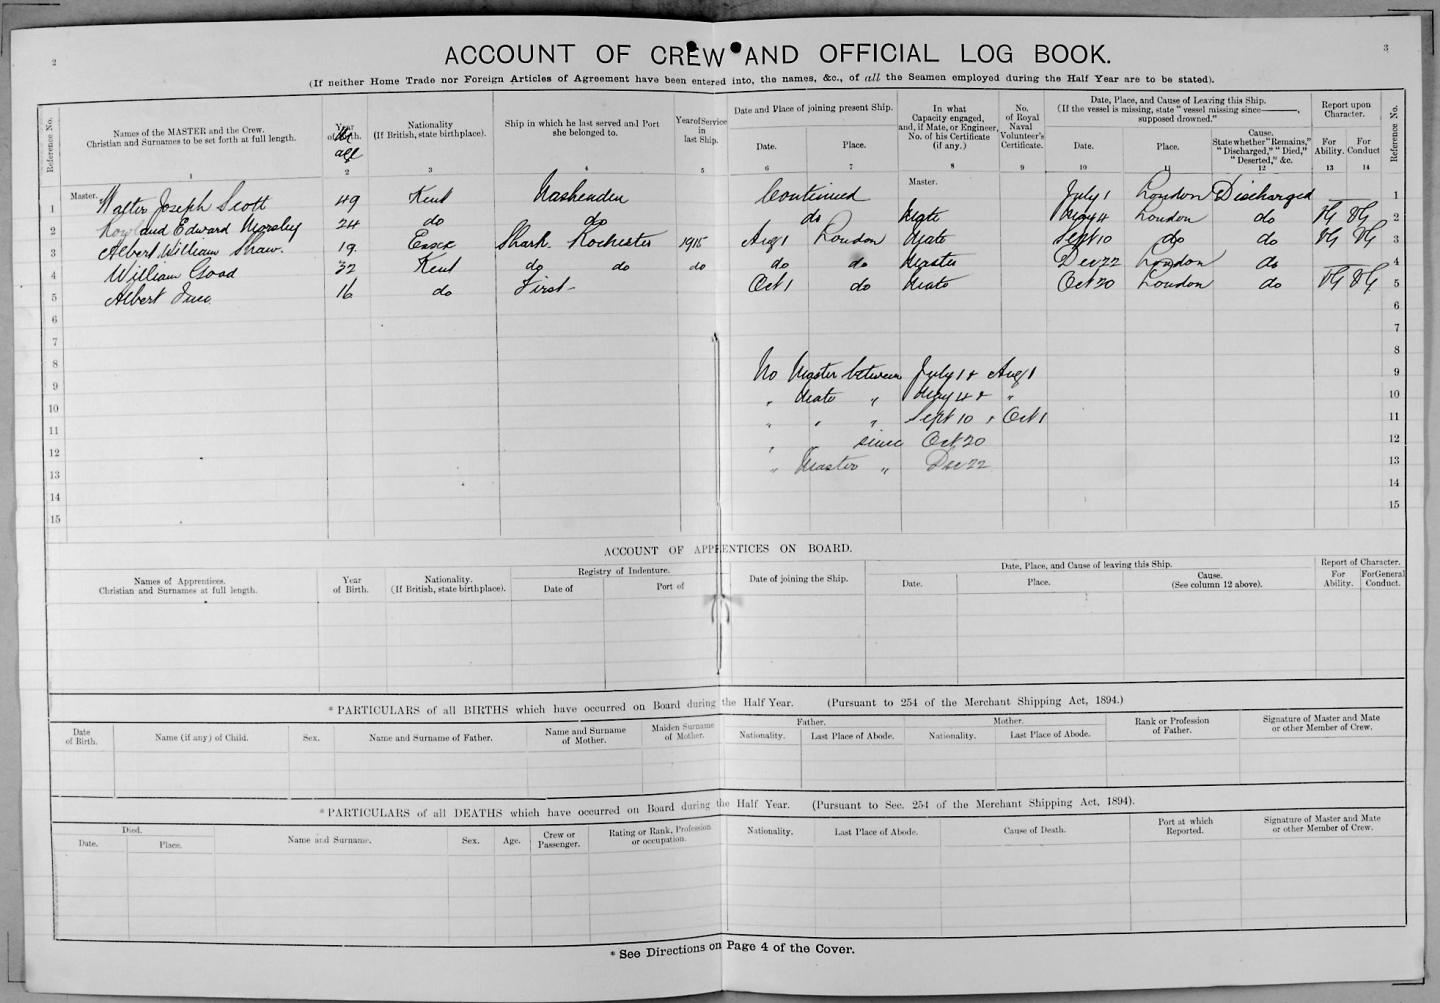 1915 Crew List from the Nashenden